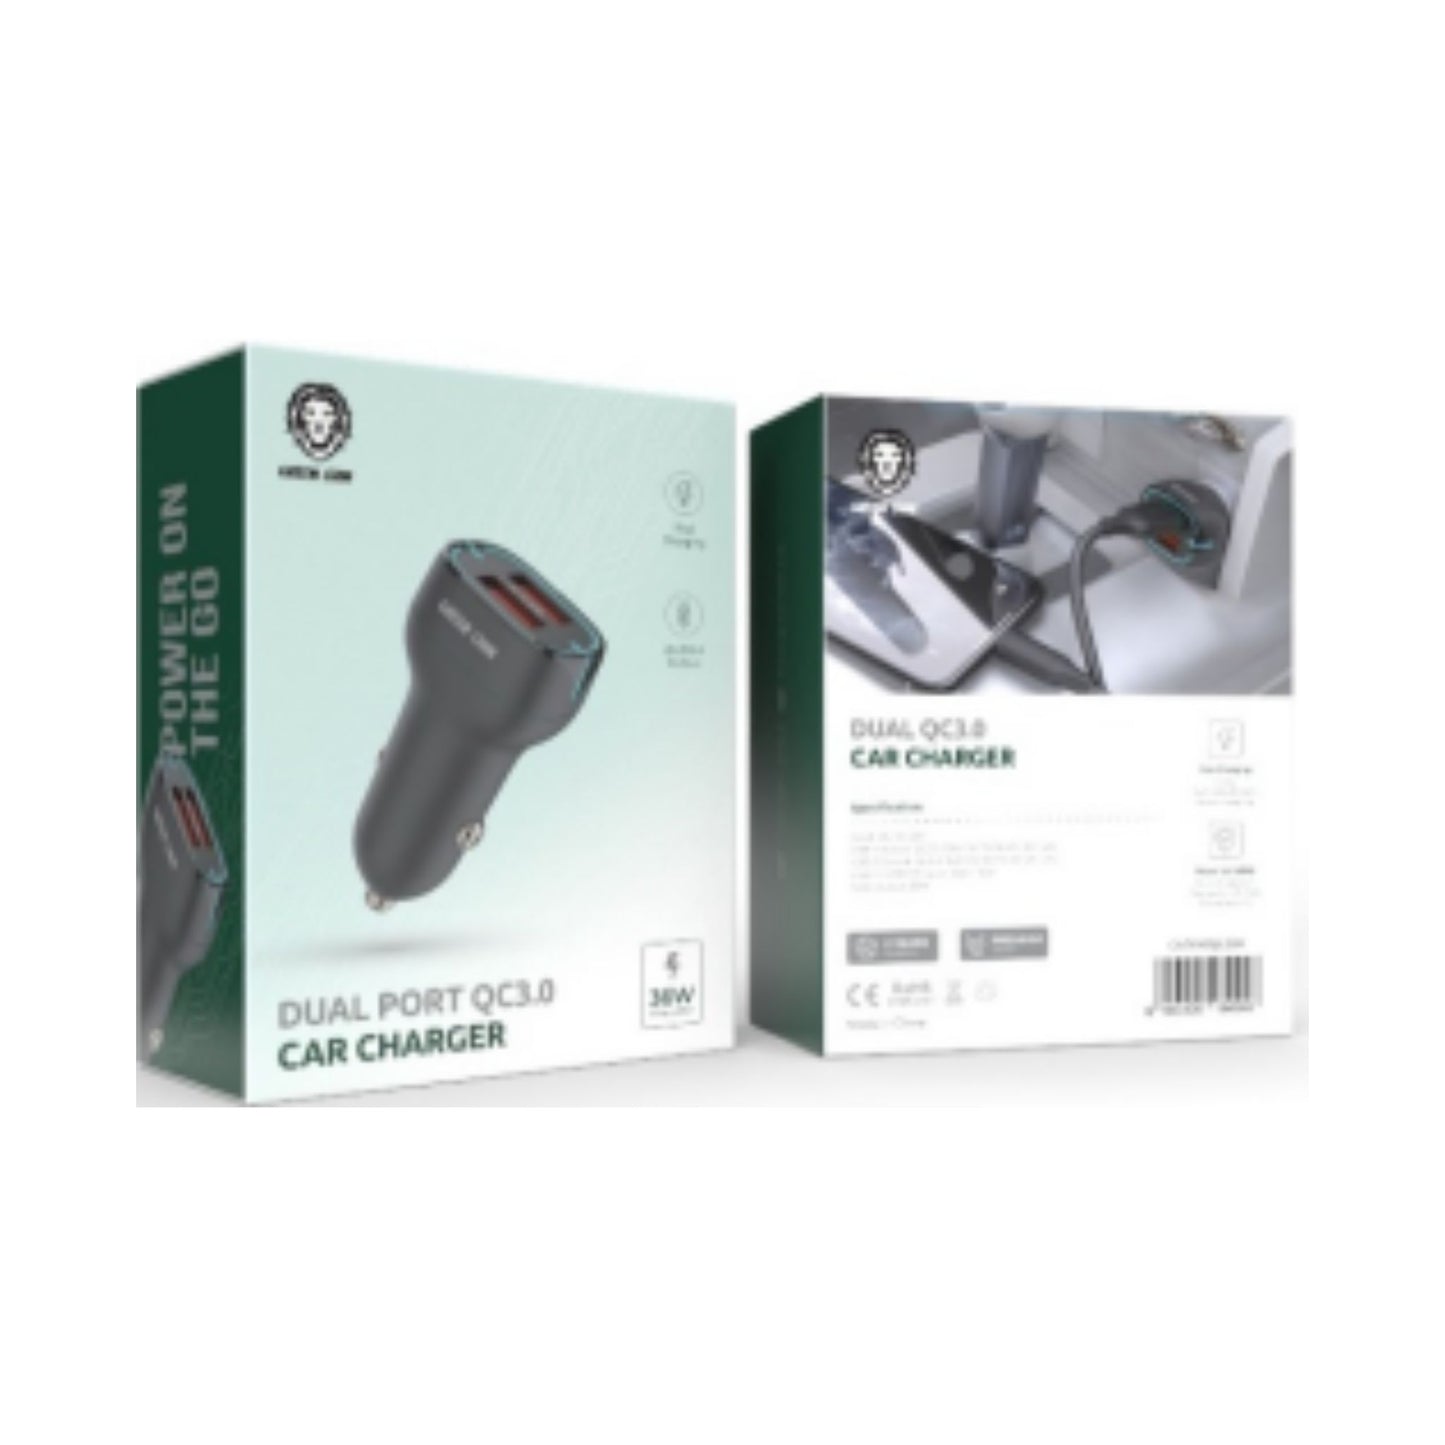 Green Lion Dual Port QC3.0 Car Charger_Black